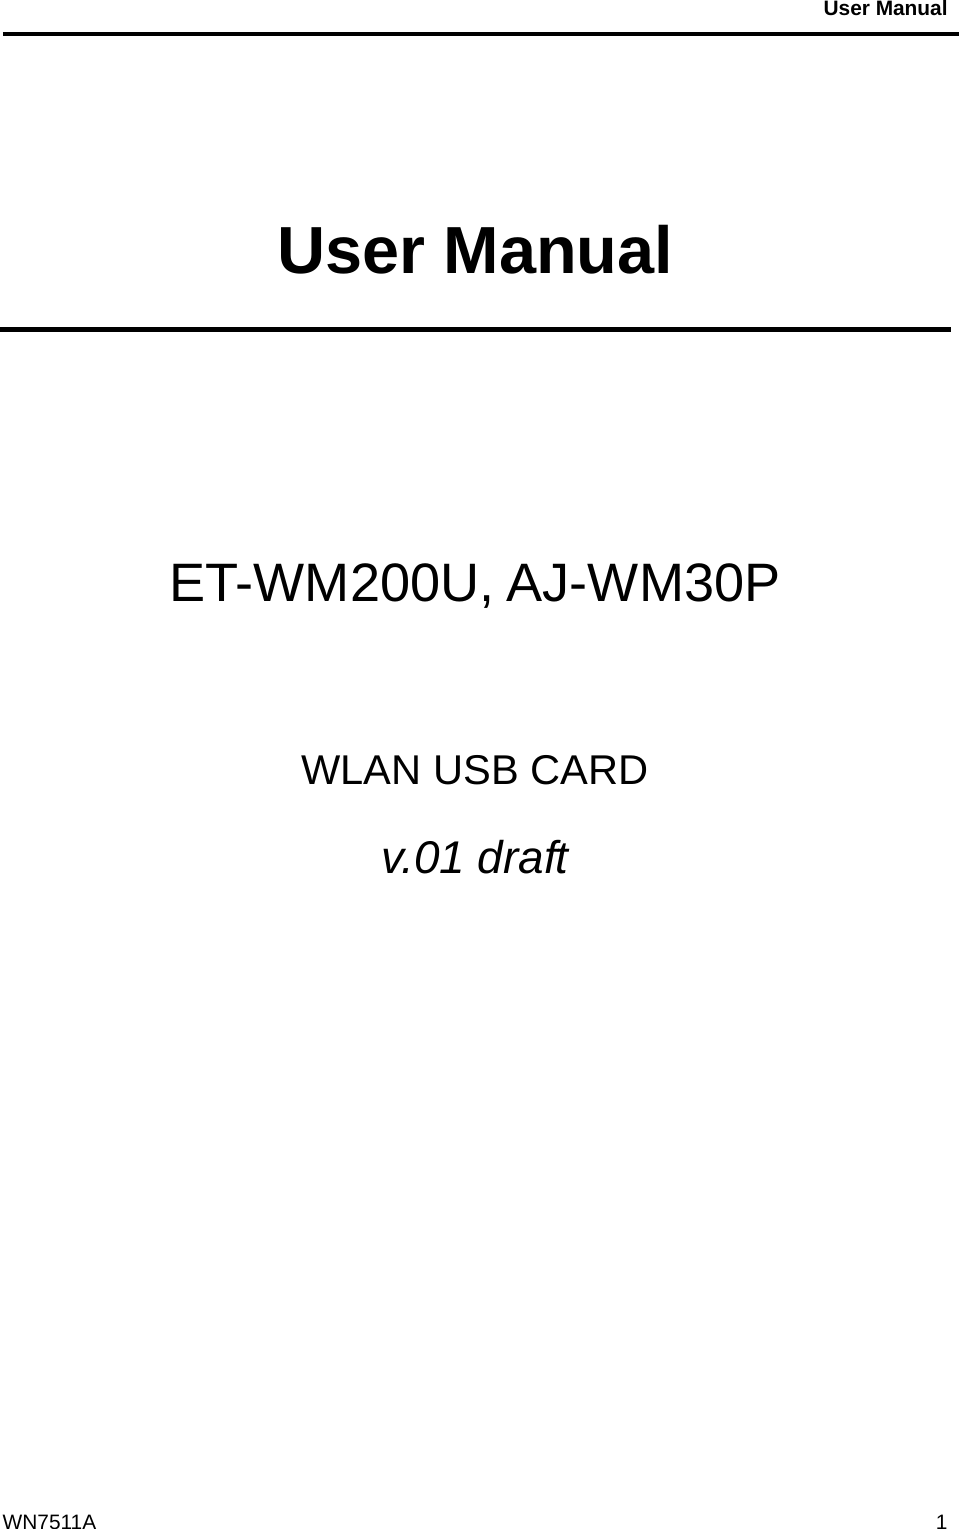                                           User Manual                                              WN7511A  1 User Manual   ET-WM200U, AJ-WM30P    WLAN USB CARD v.01 draft    